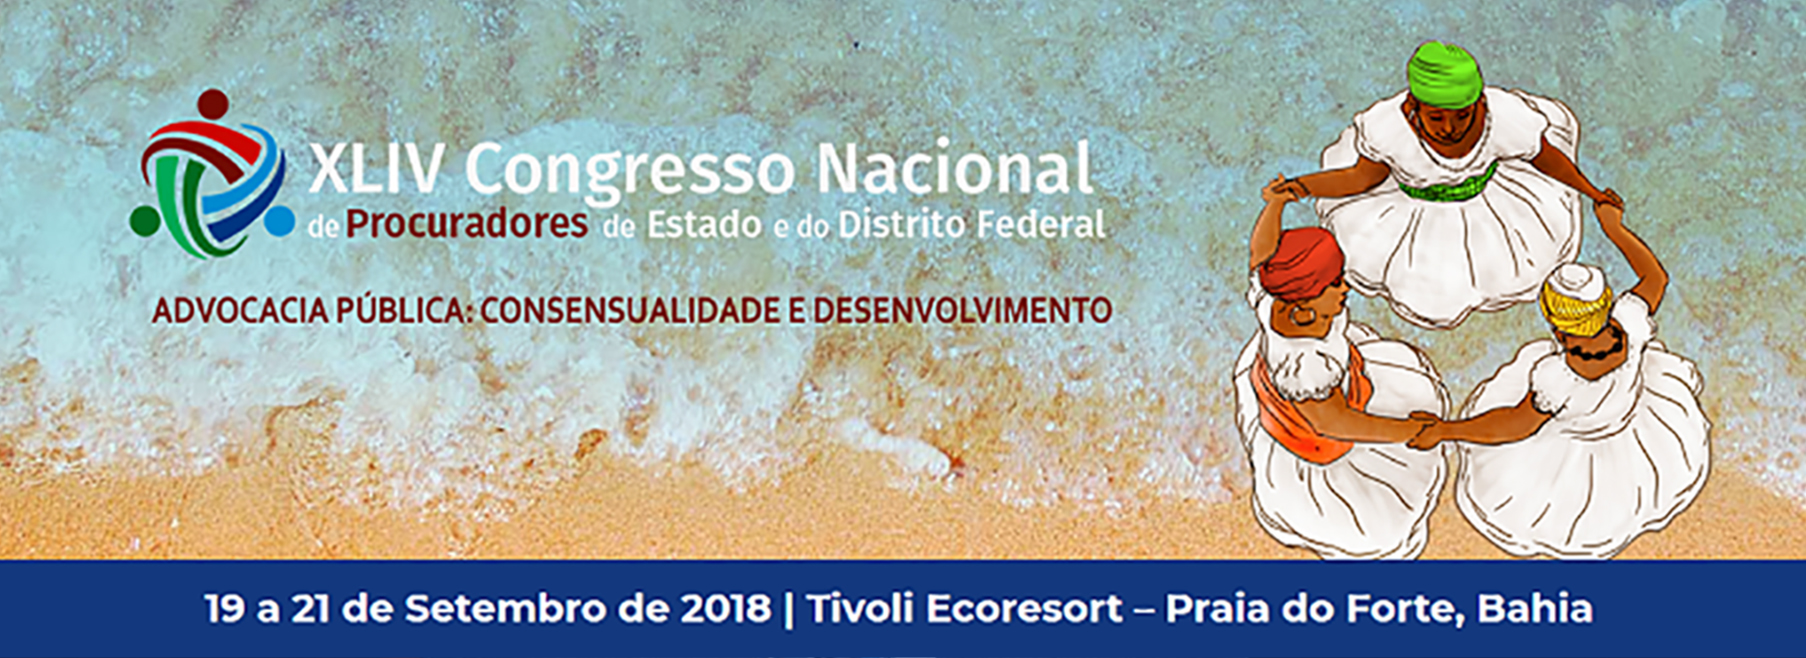 Membros participam de congresso nacional na Bahia